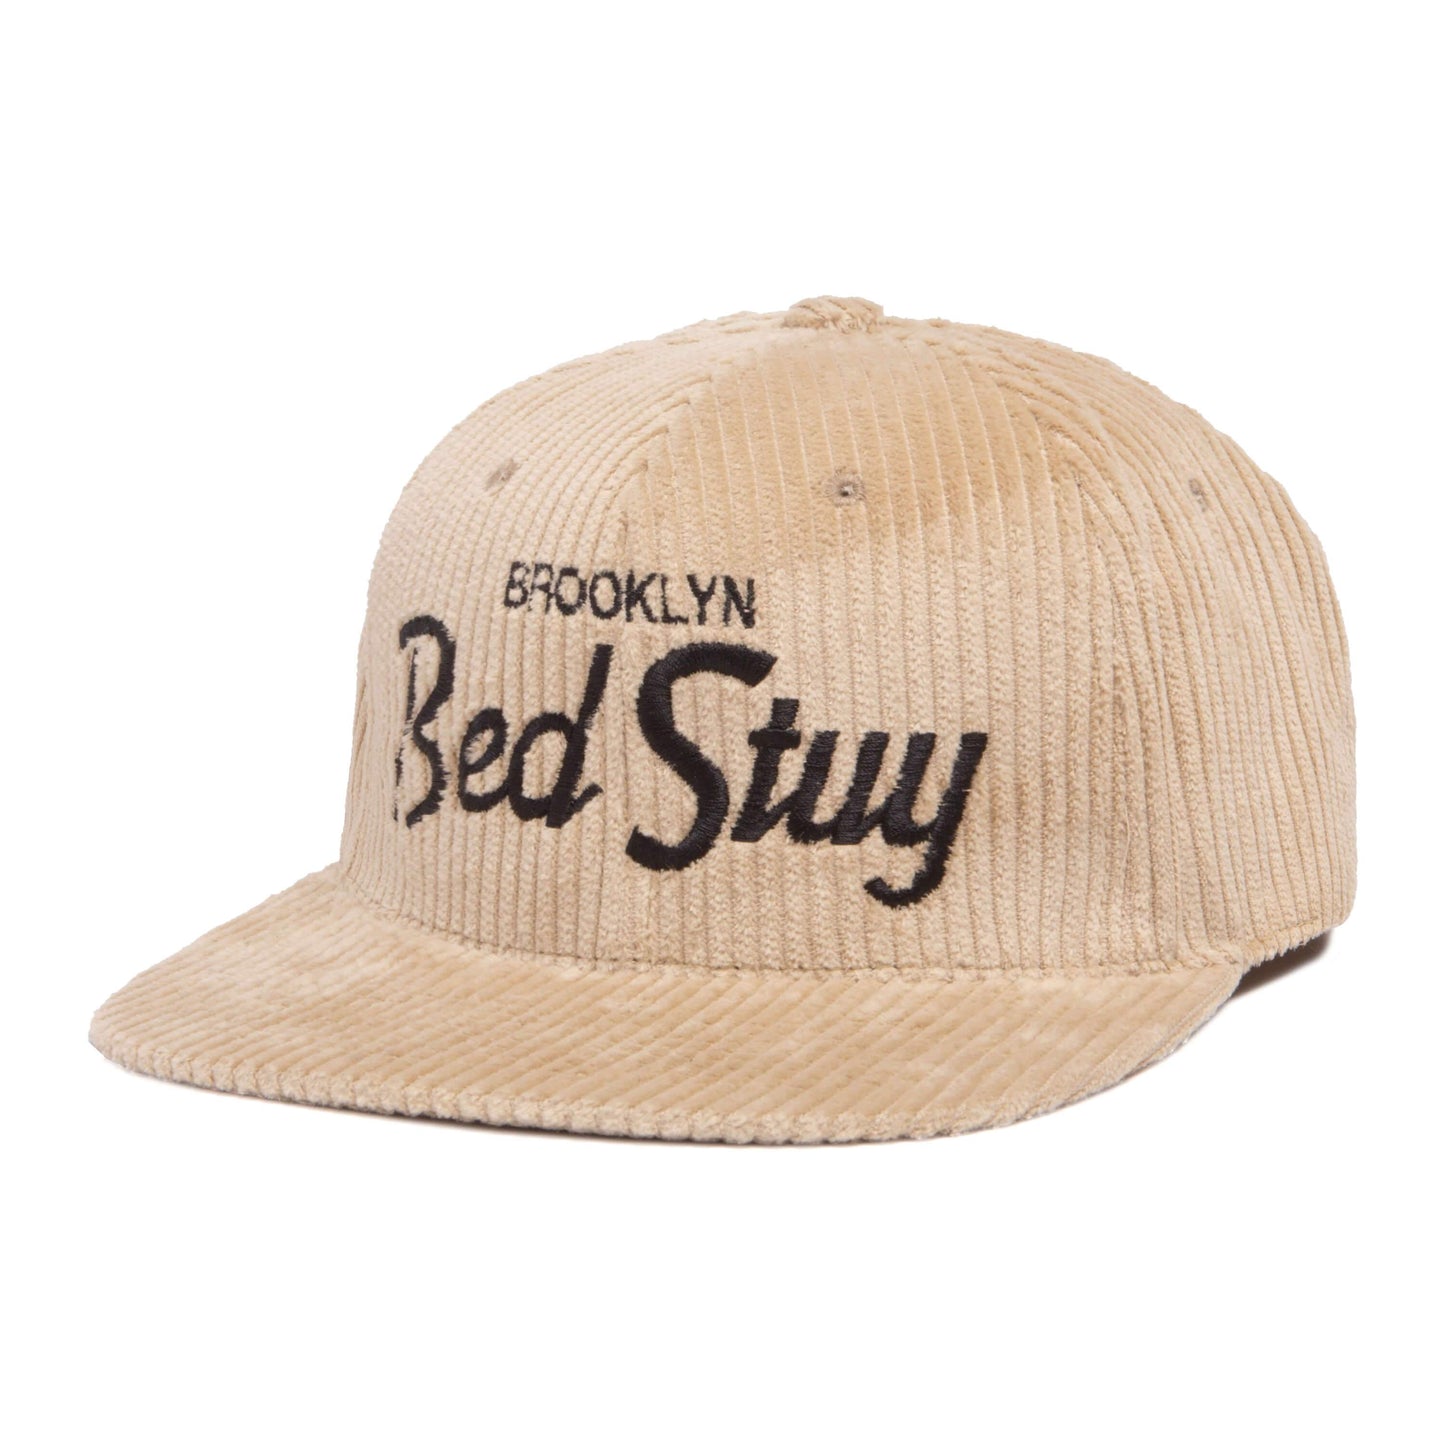 Bed Stuy Corduroy Snapback Hat